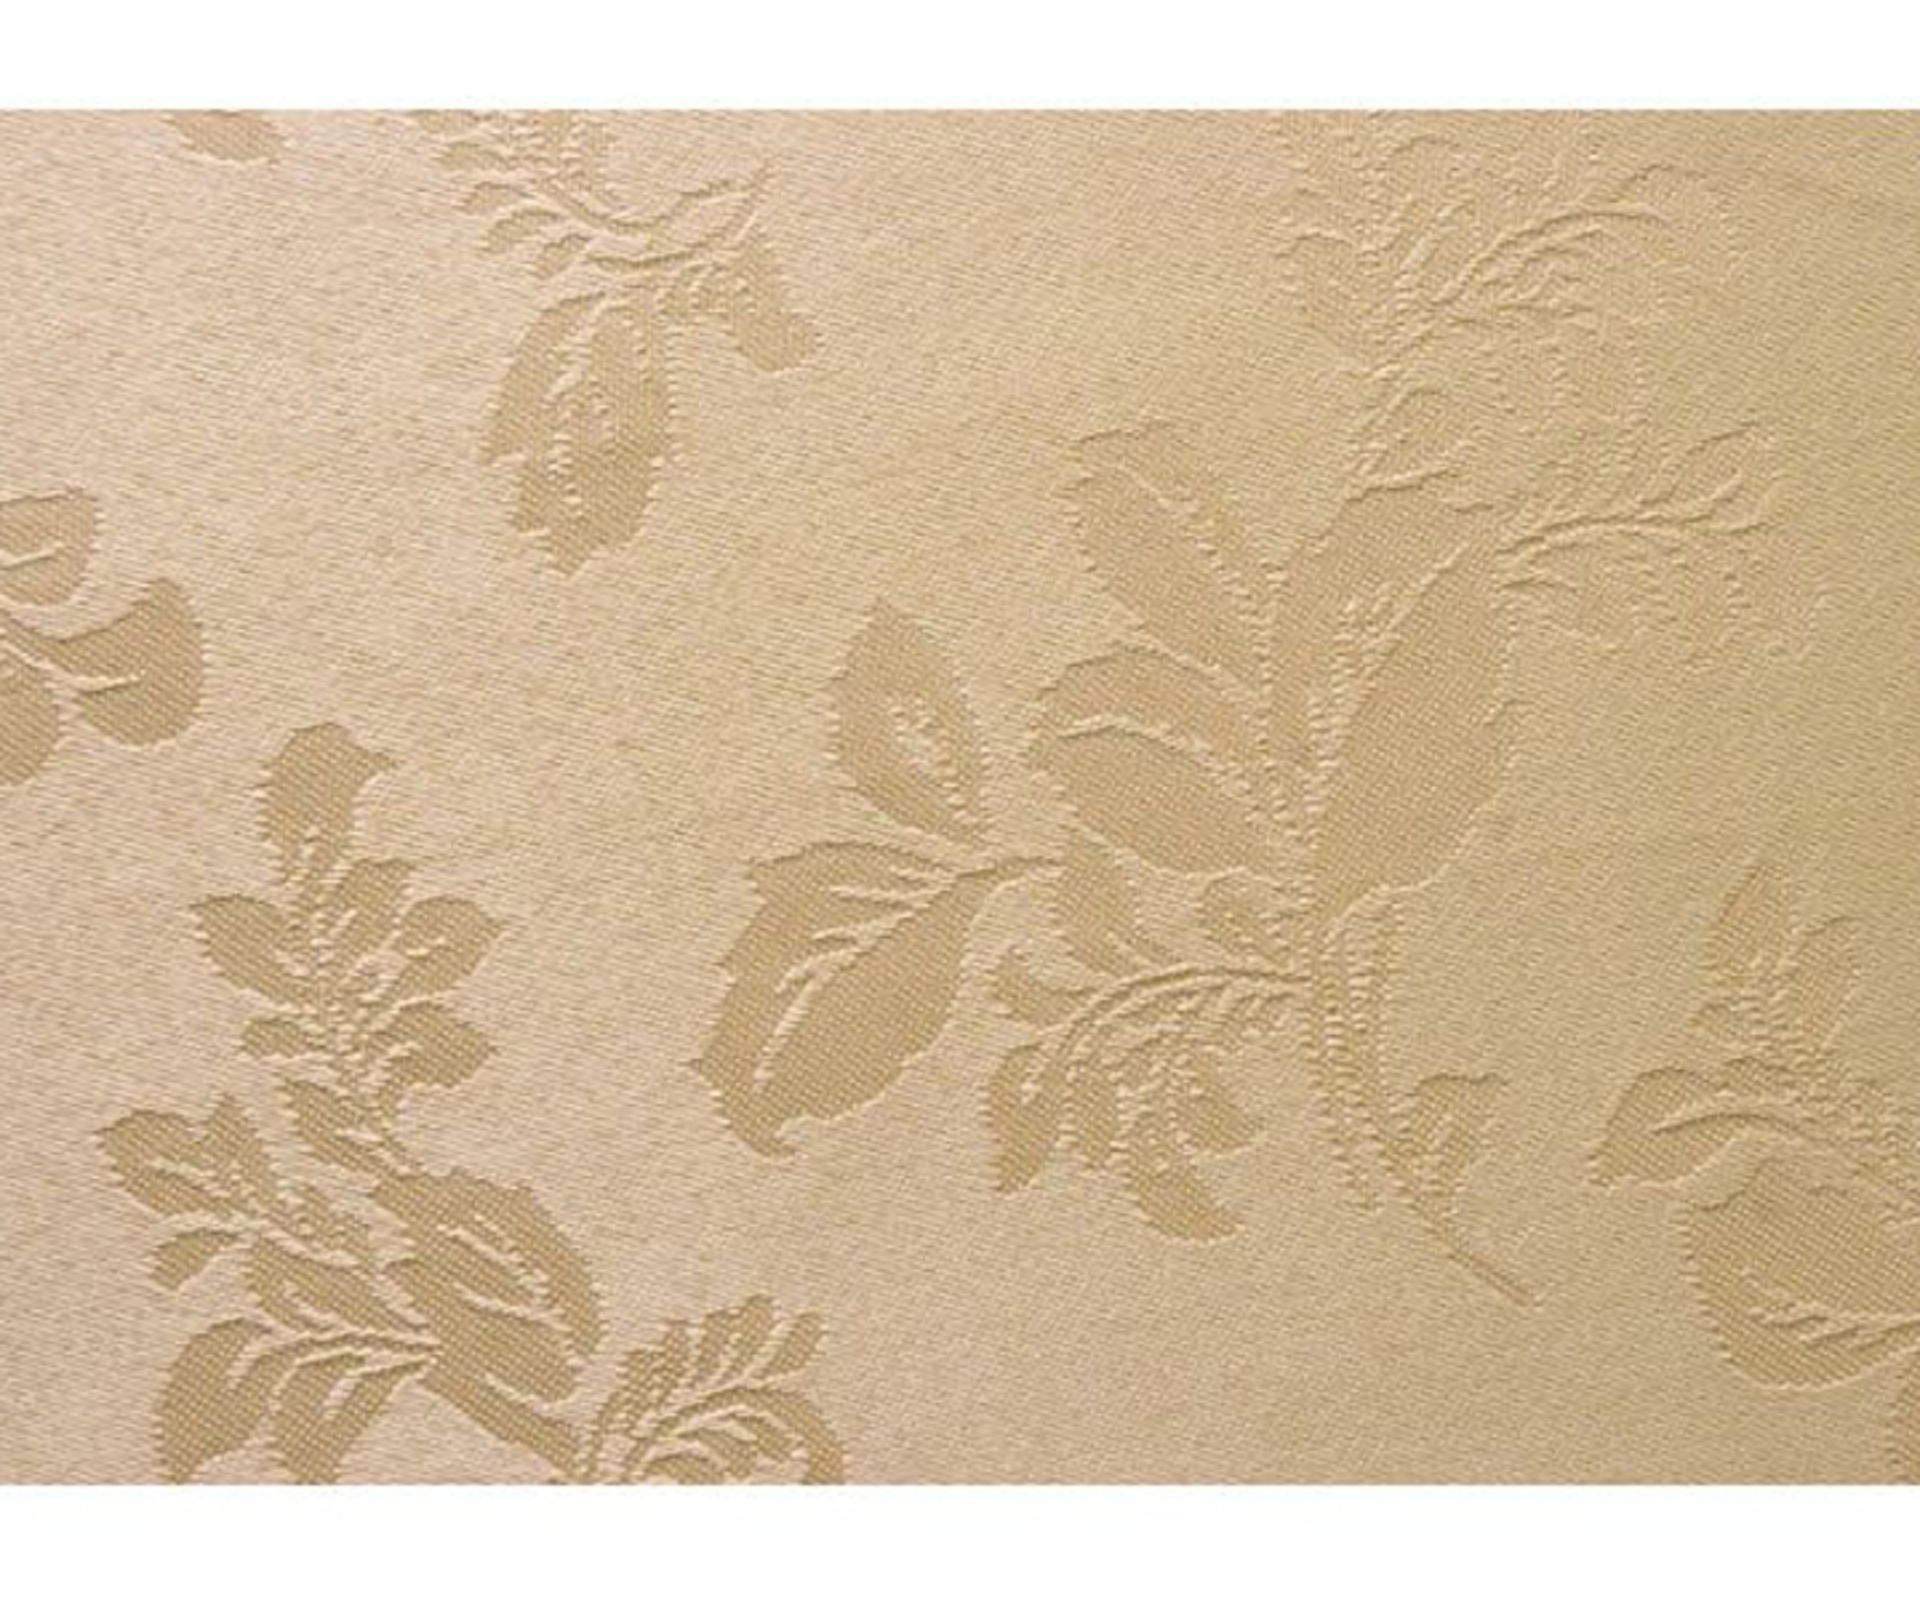 V Brand New Luxury Stain Resistant Linen Table Cloth 160 x 210cm Gold - ISP £34.99 (islshop-UK) - Image 3 of 3